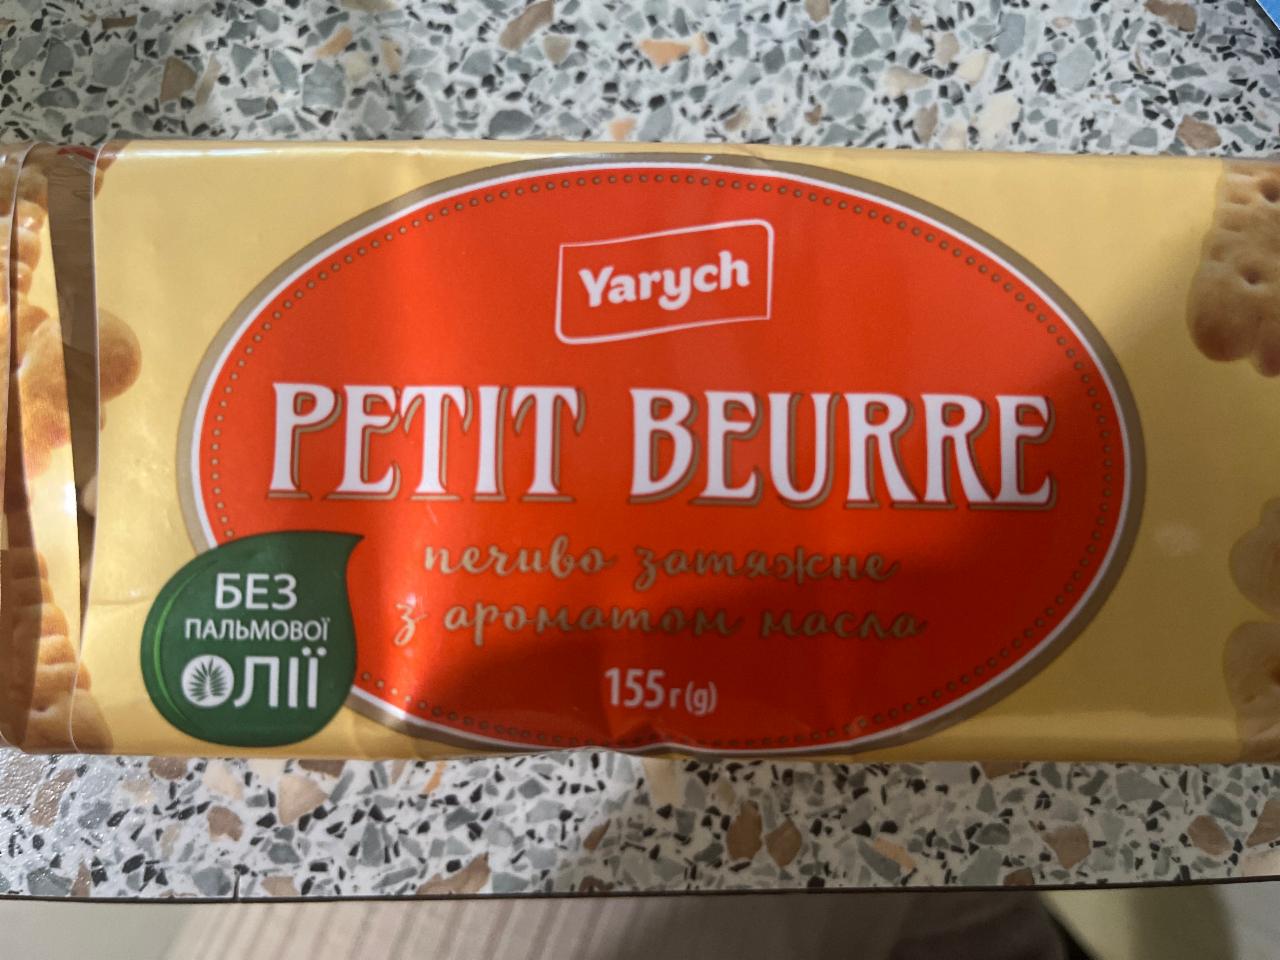 Фото - Печиво затяжне з ароматом масла Petit Beurre Yarych